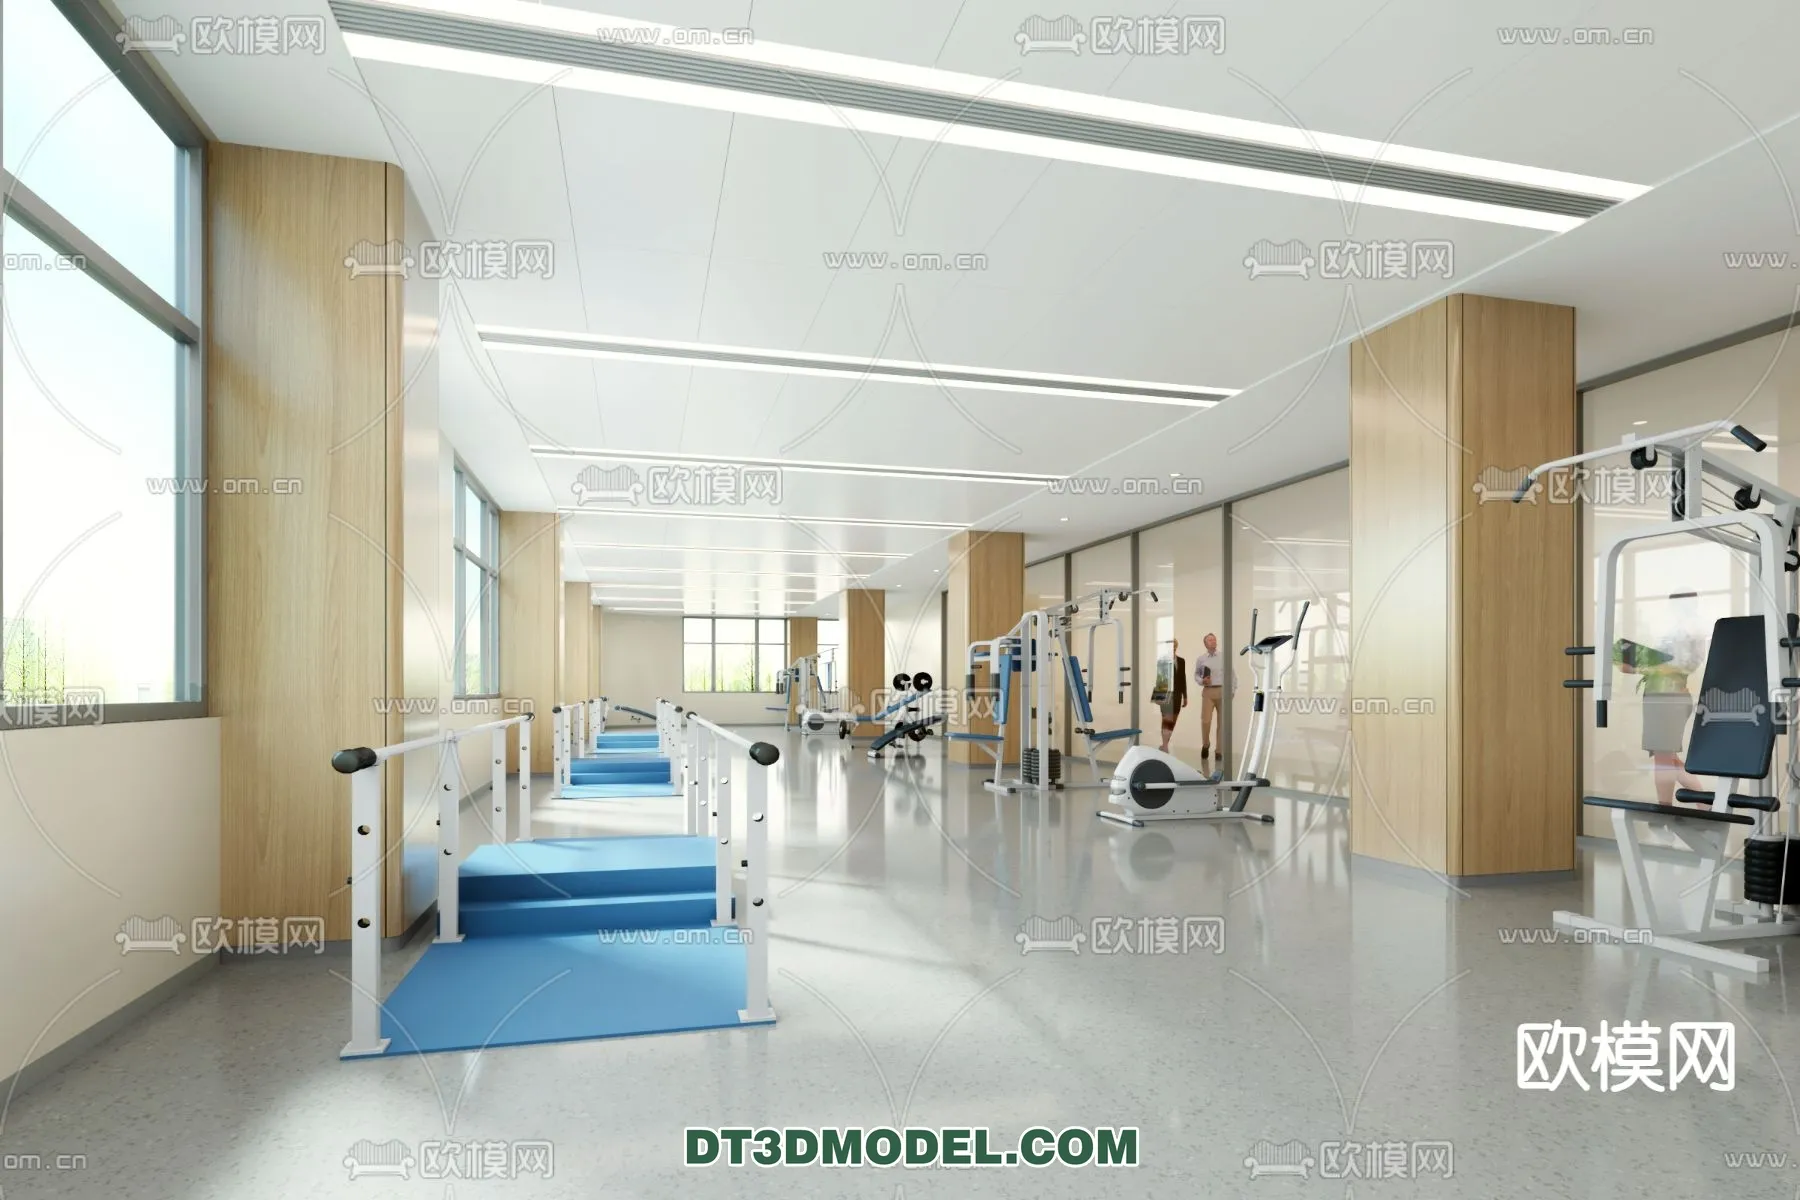 HOSPITAL 3D SCENES – MODERN – 0192